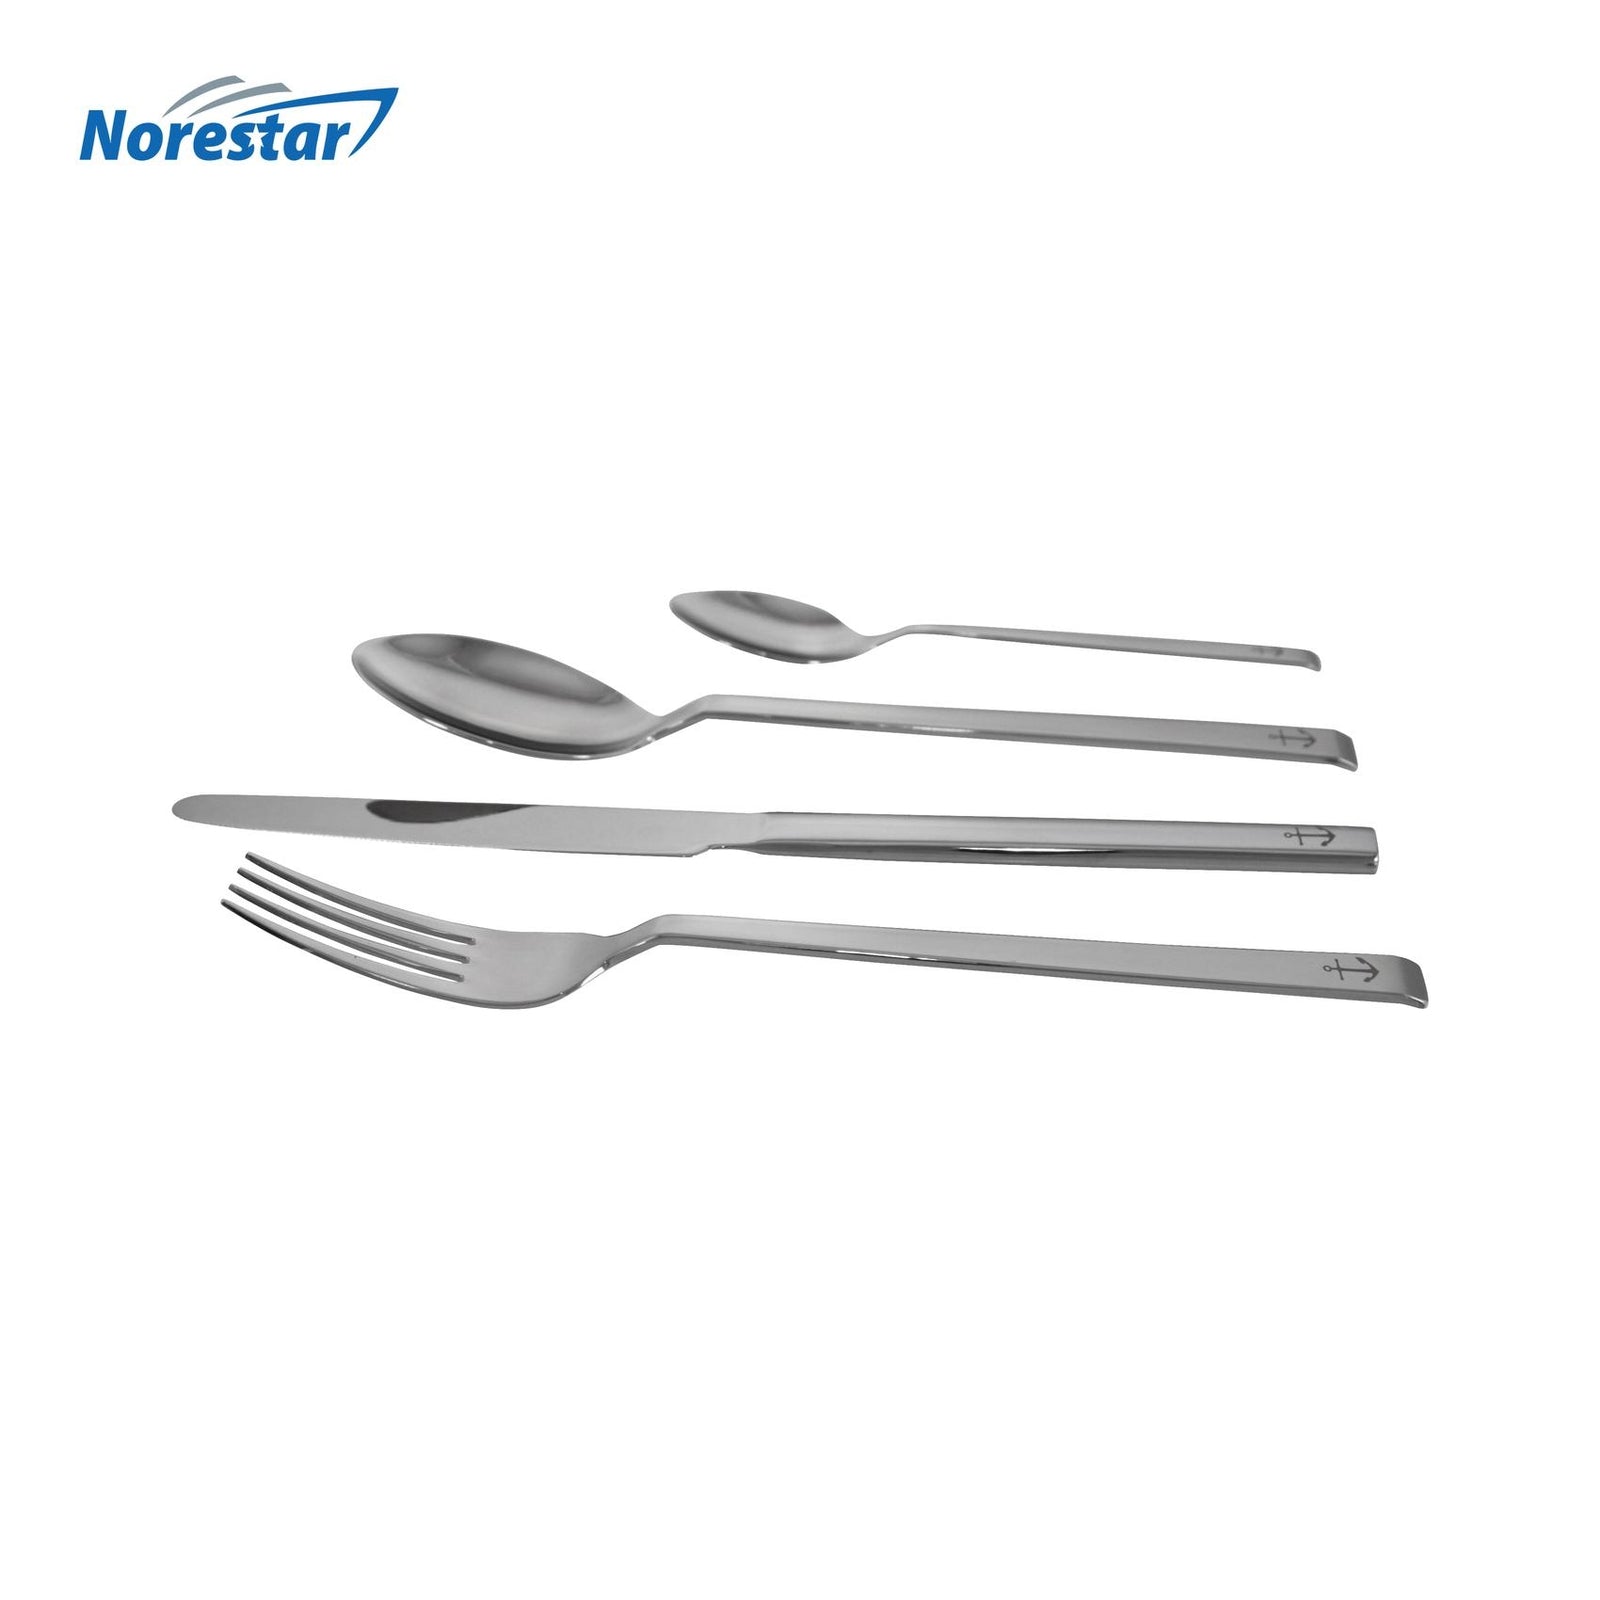 24 Piece Stainless Steel Nautical Theme Cutlery/Flatware Set